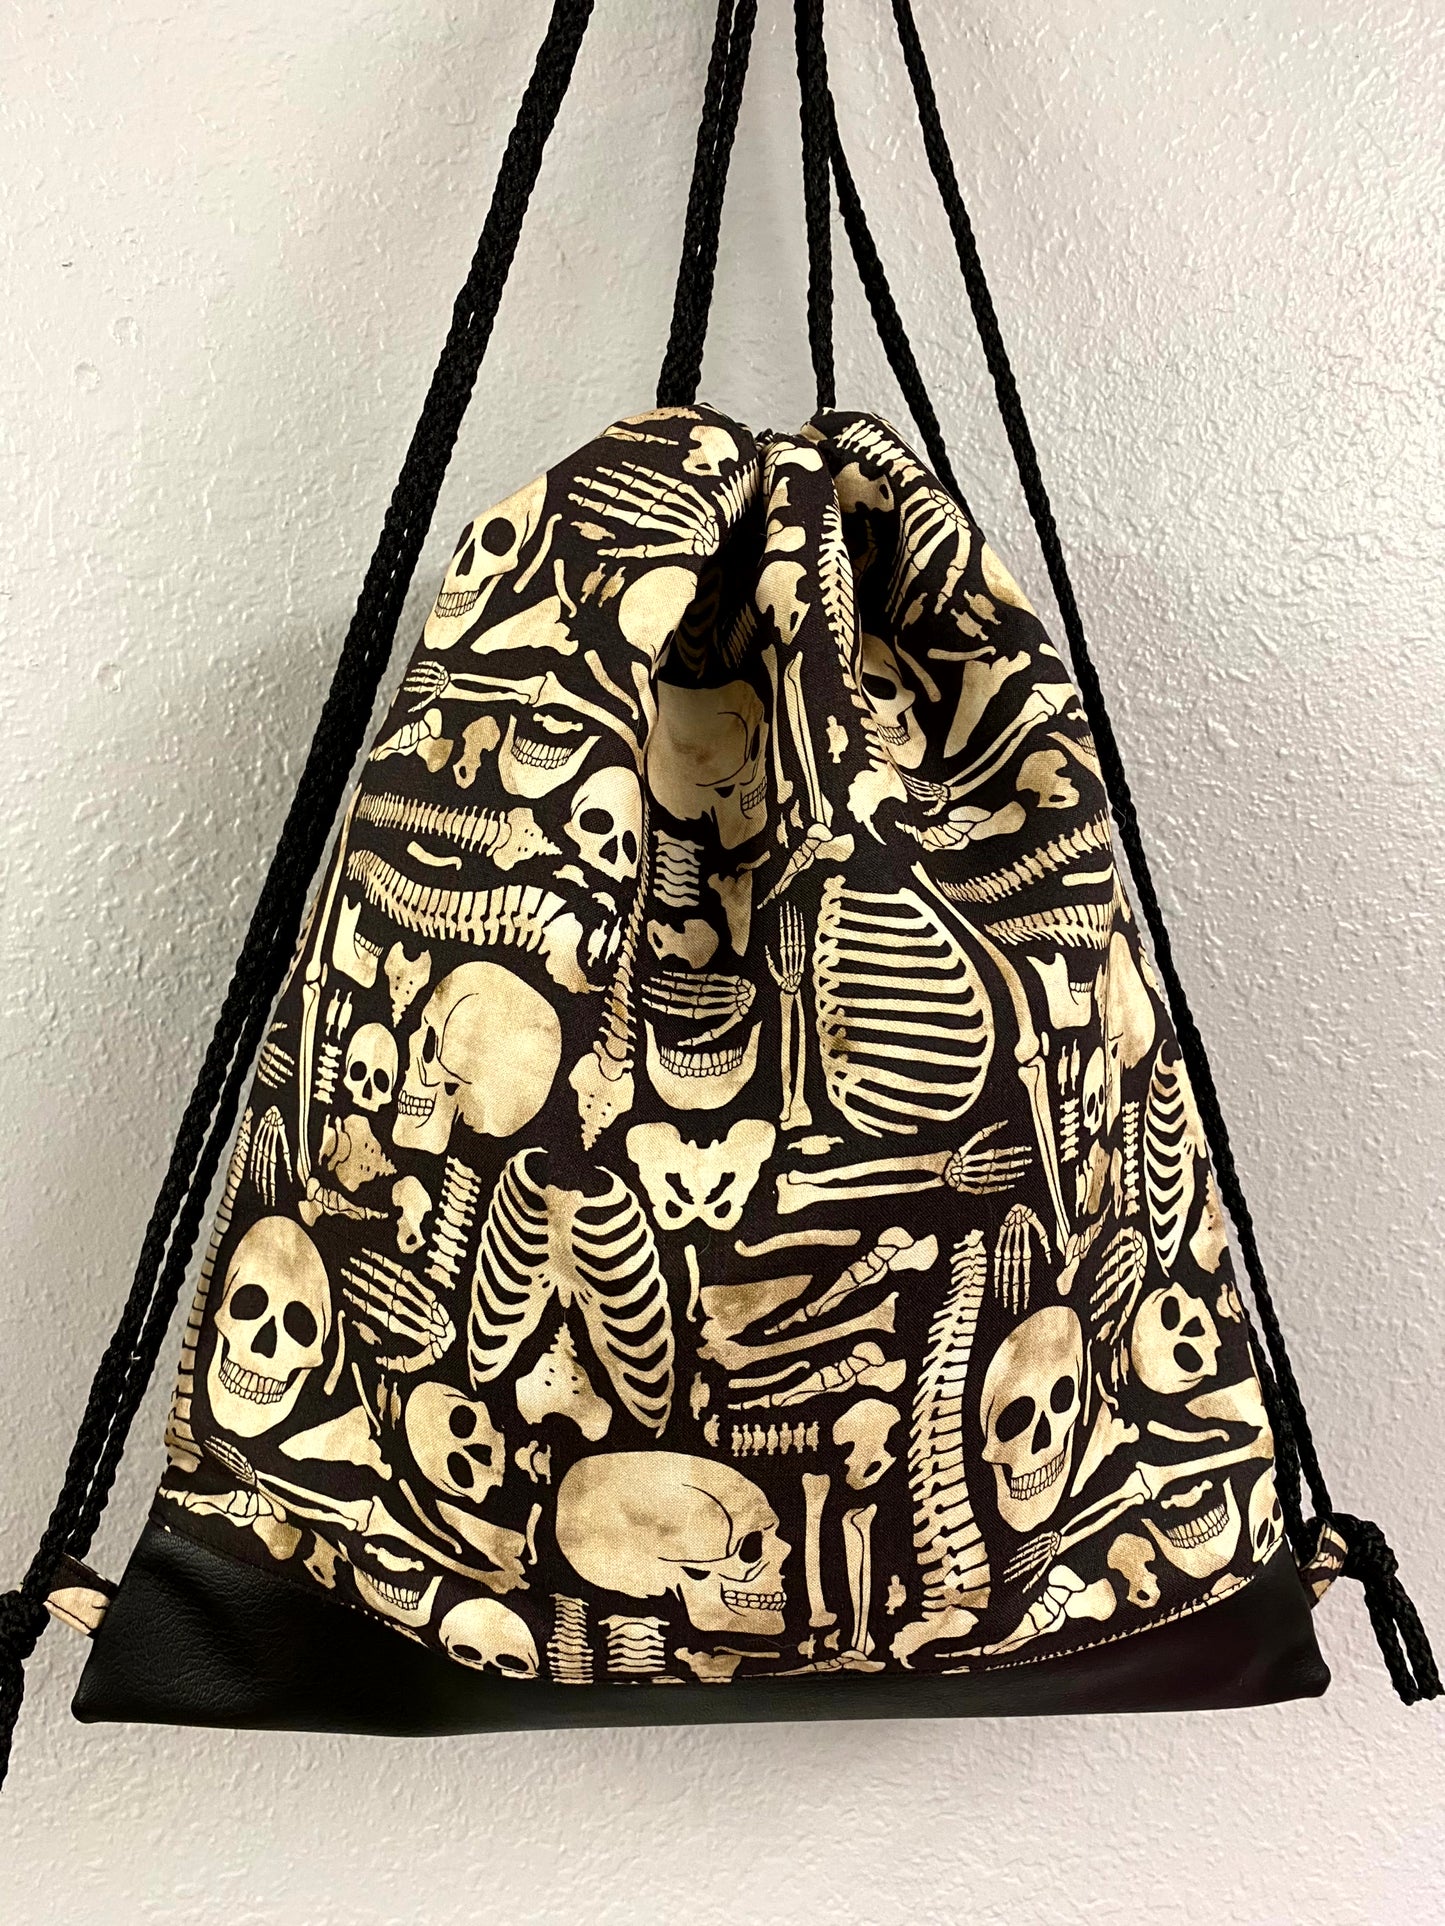 Skeleton Drawstring Bag - Handmade Drawstring Bag – Drawstring Backpack - On the Go Bag - Overnight Bag